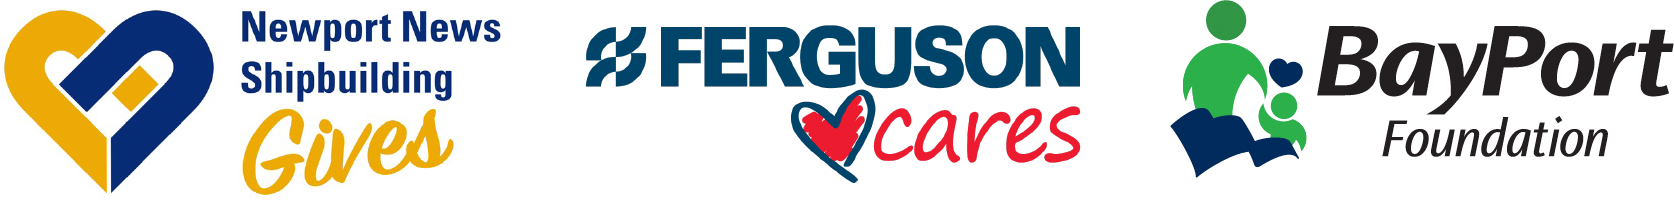 Newport News Shipbuilding Gives, Ferguson Cares, BayPort Foundation logos